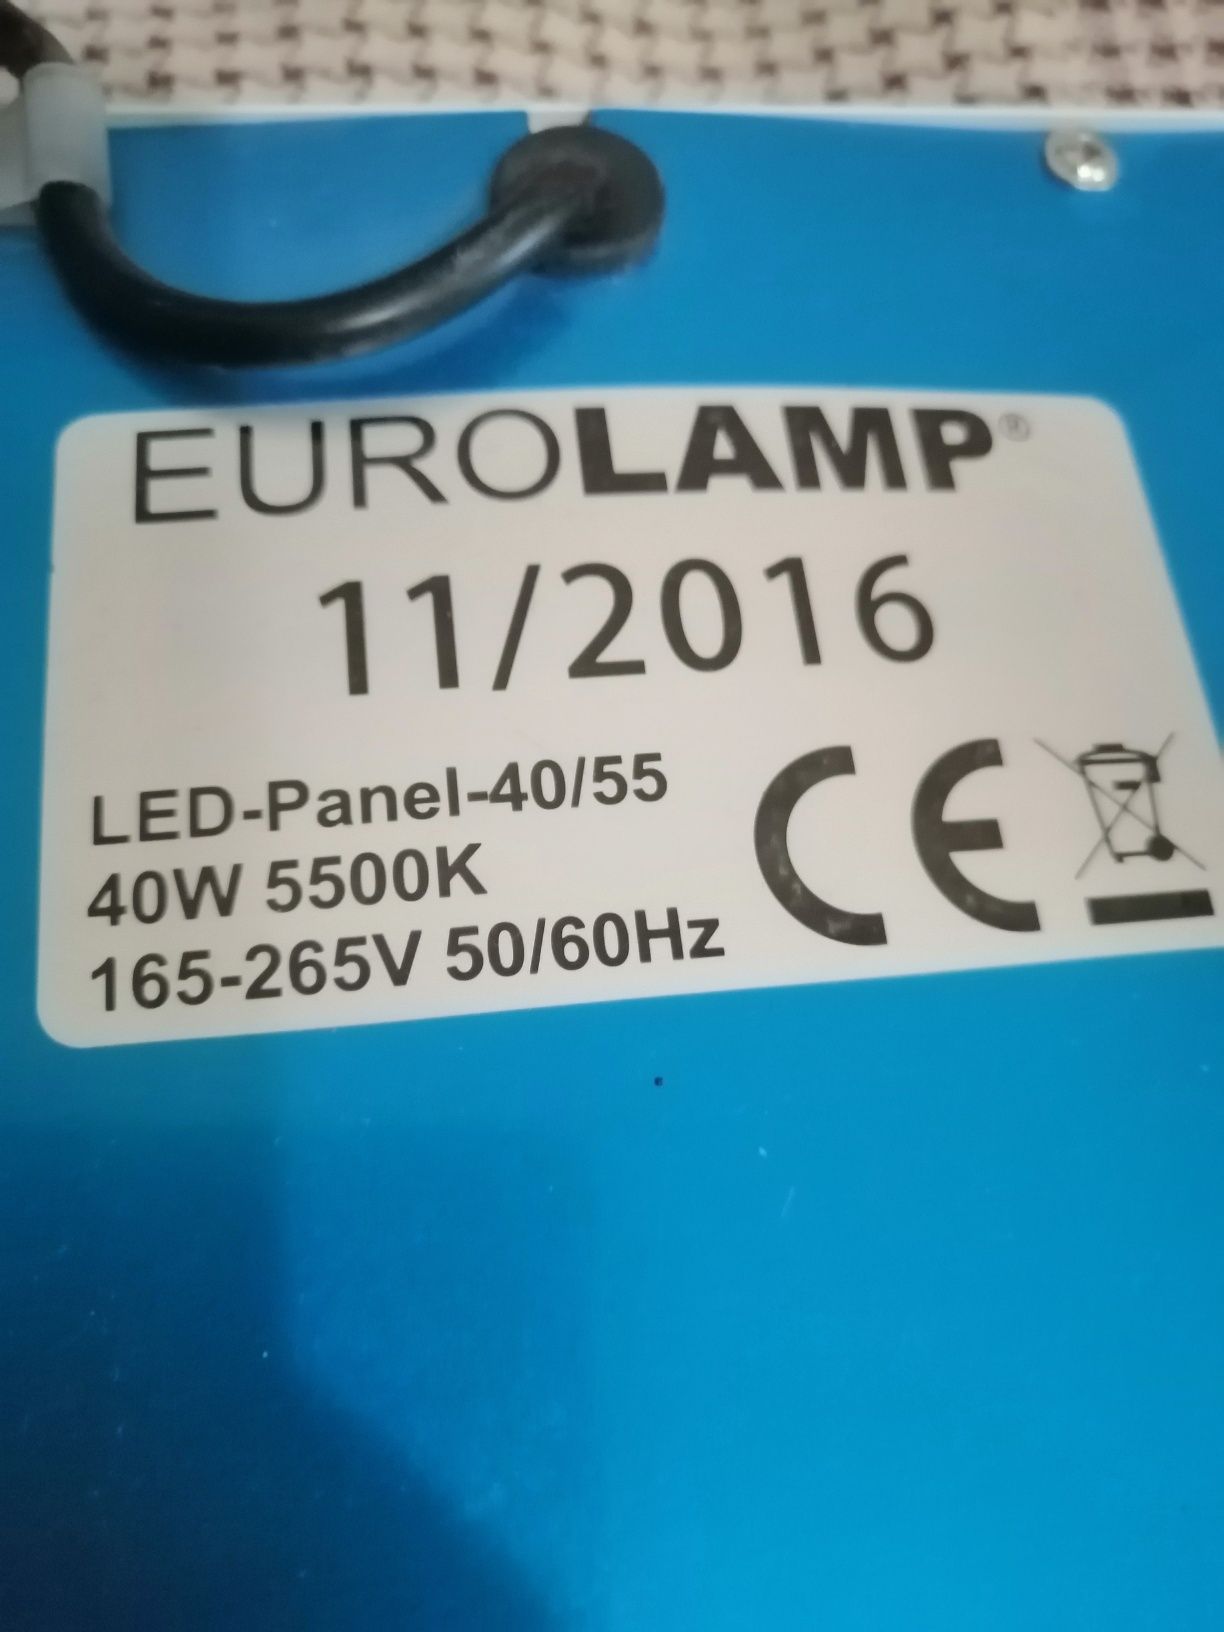 LED Panel Eurolamp 40W 5500K LED-Panel-40/55